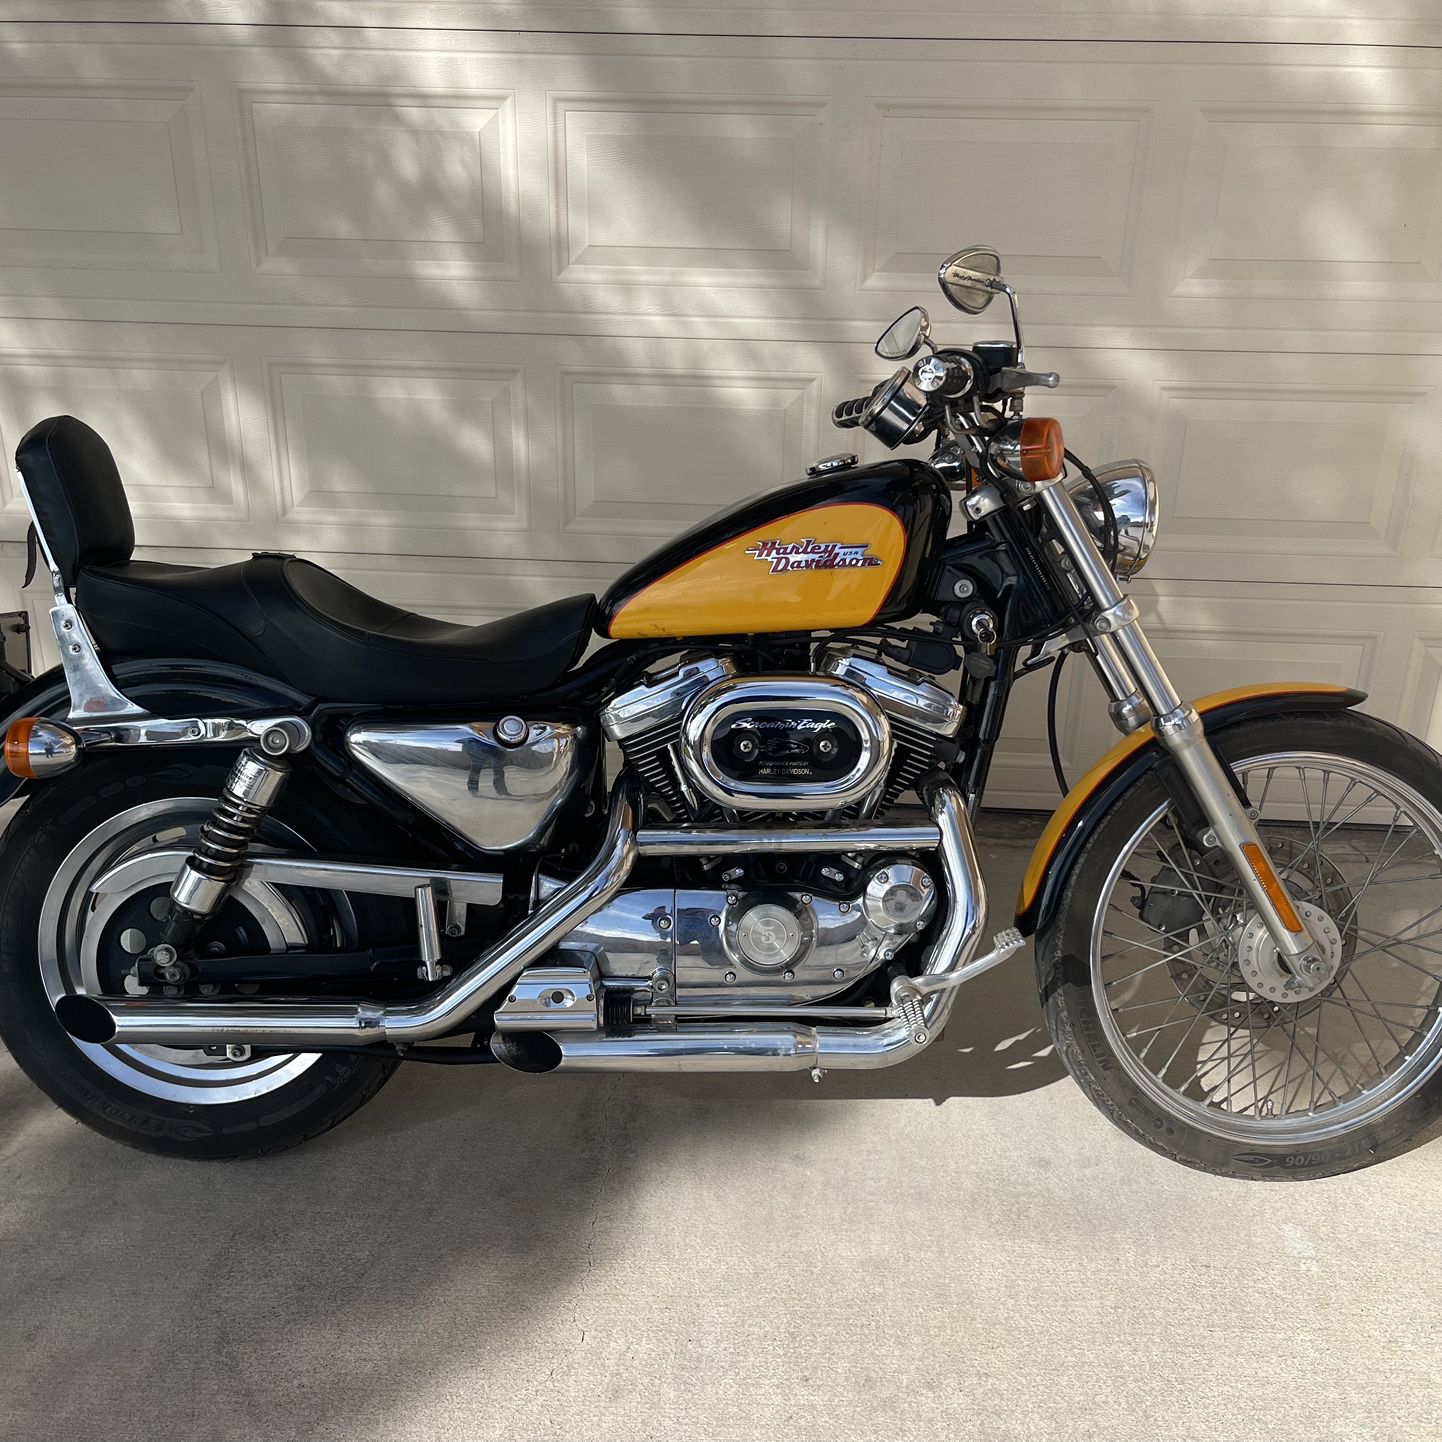 2000 Harley Davidson Sportswriter 1200